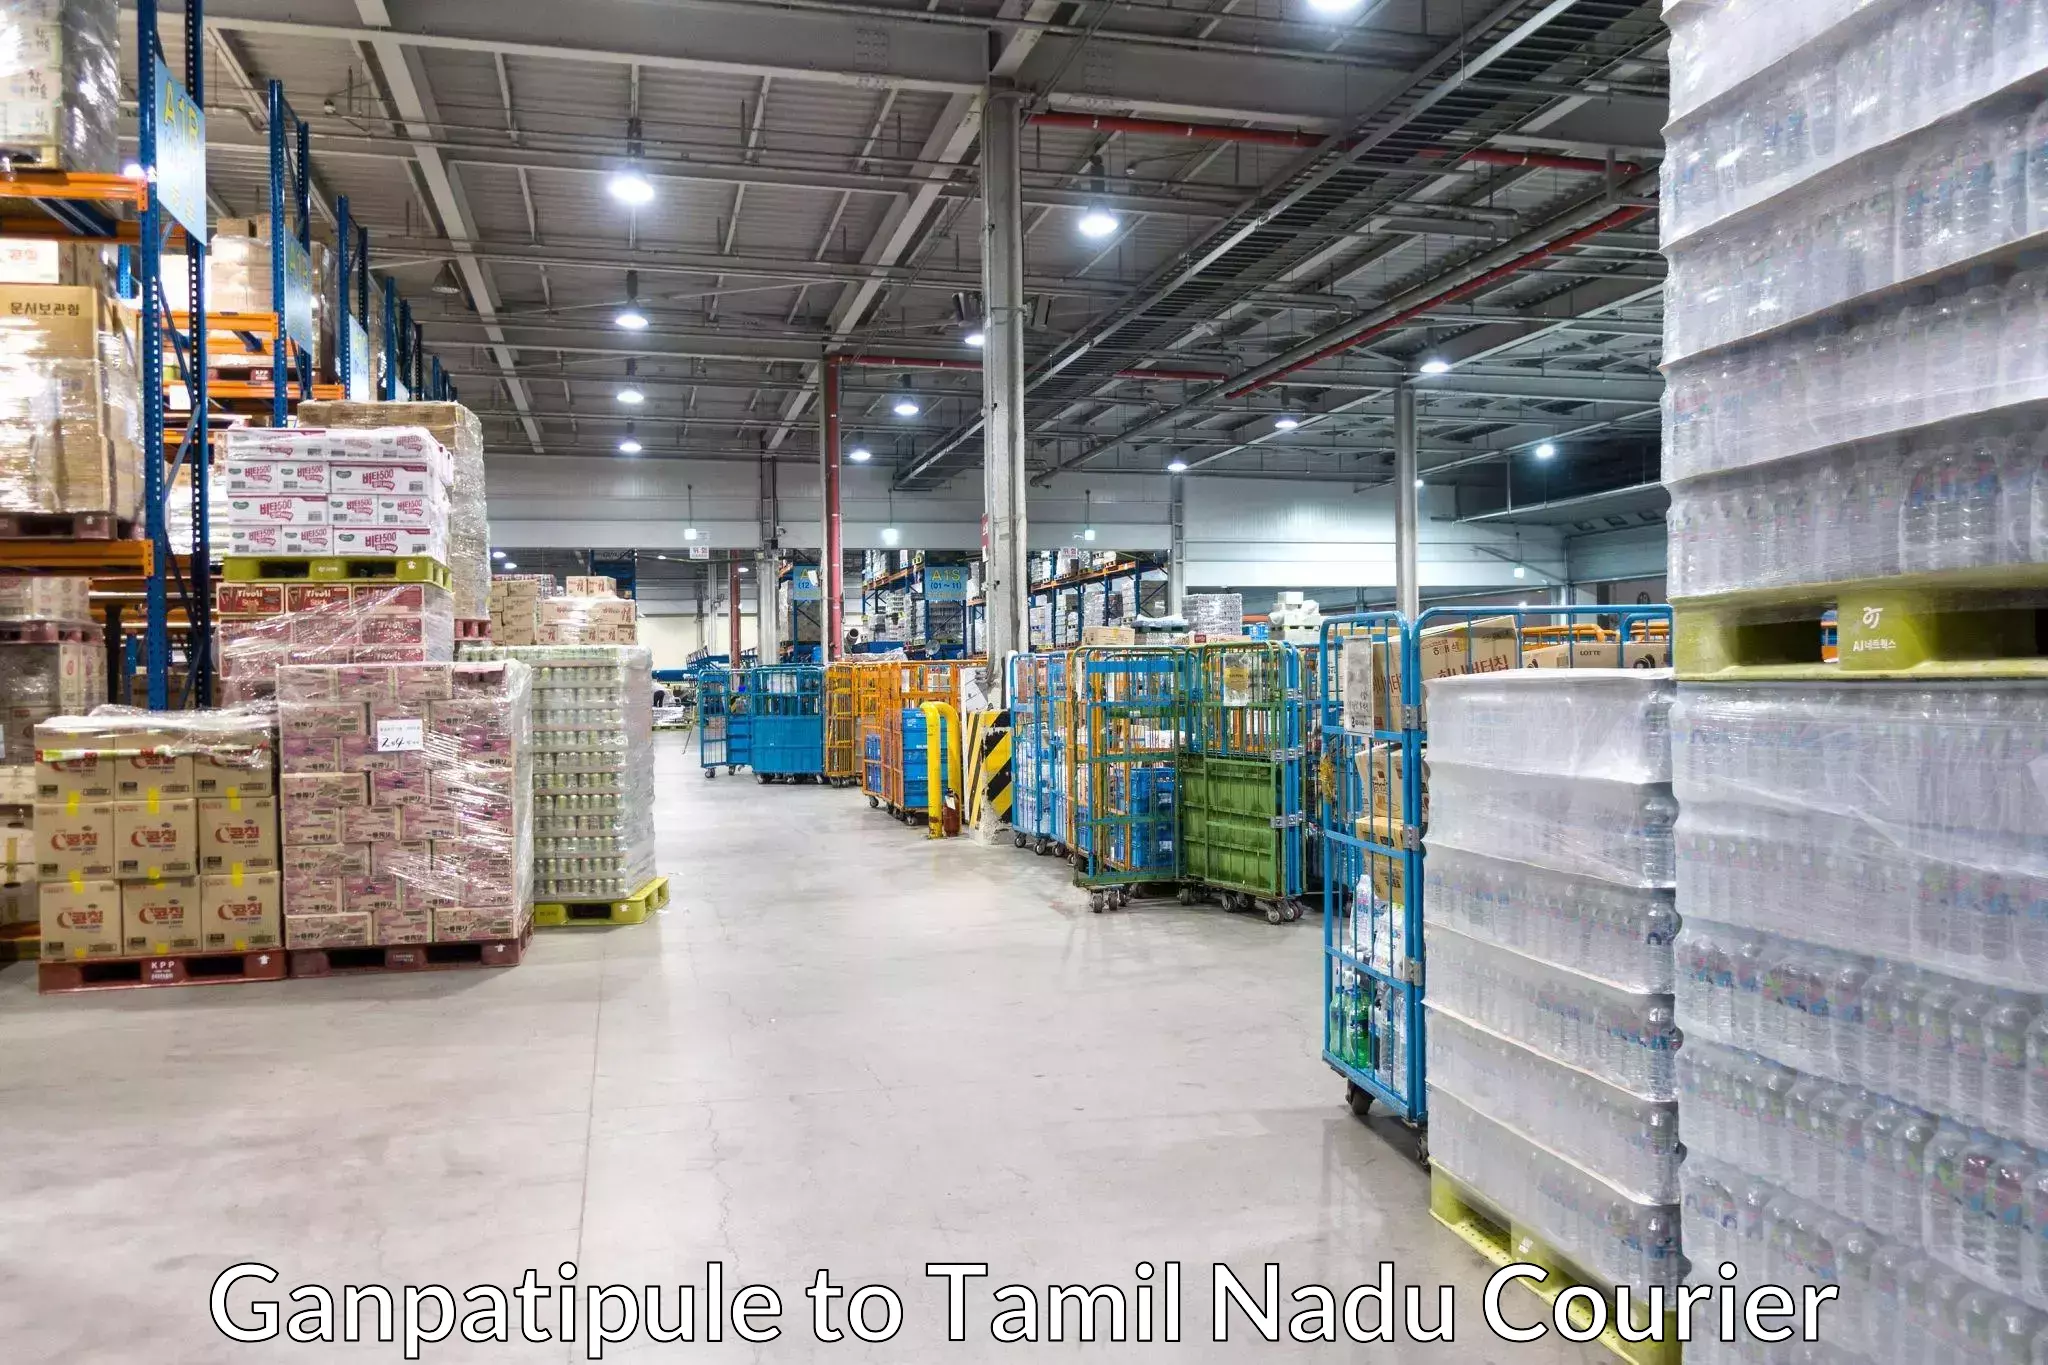 International parcel service Ganpatipule to Tamil Nadu